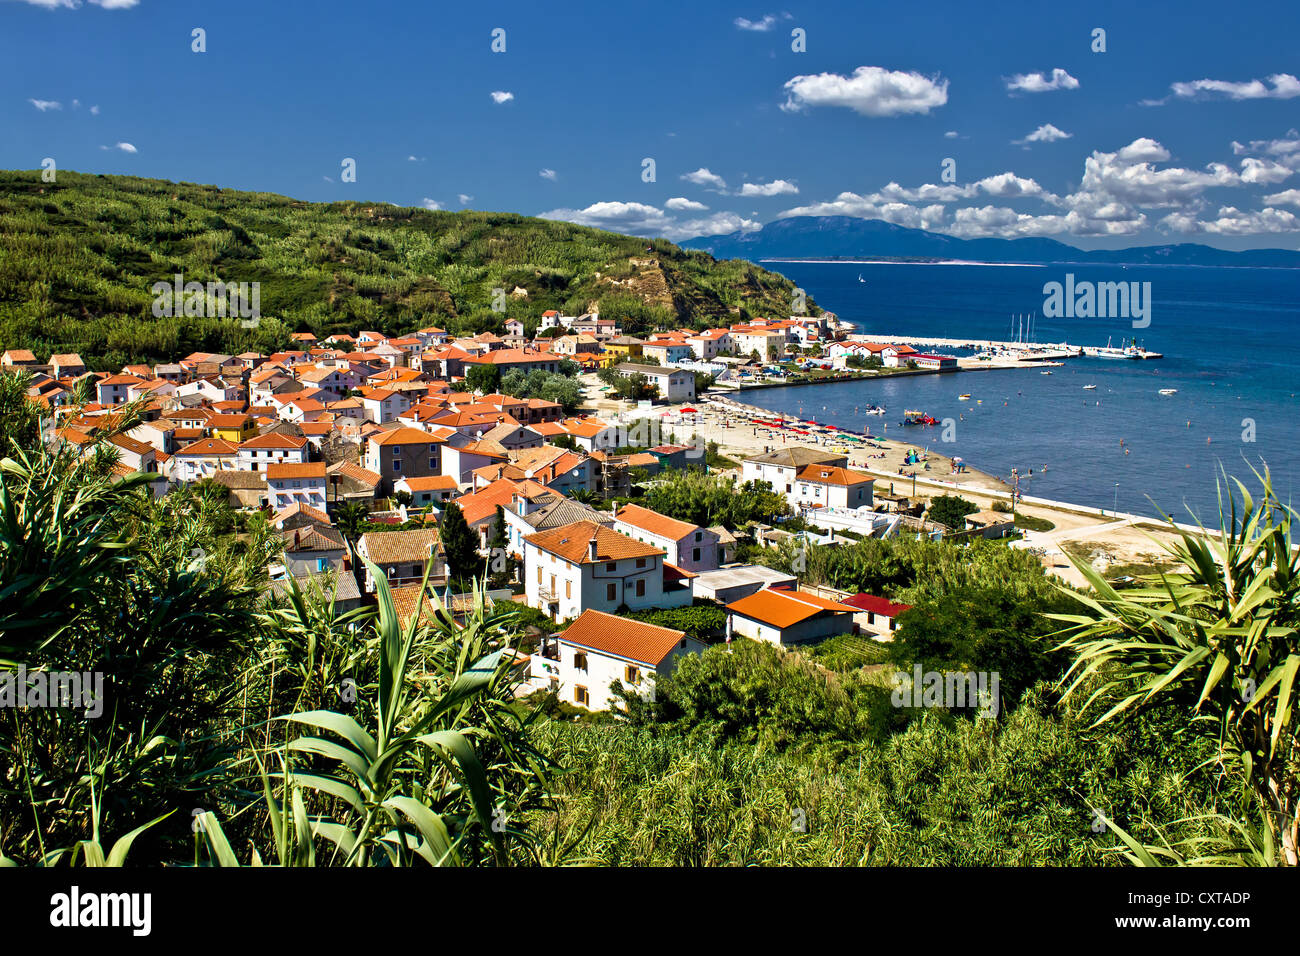 Dalmatian island of Susak village and harbor, Croatia Stock Photo